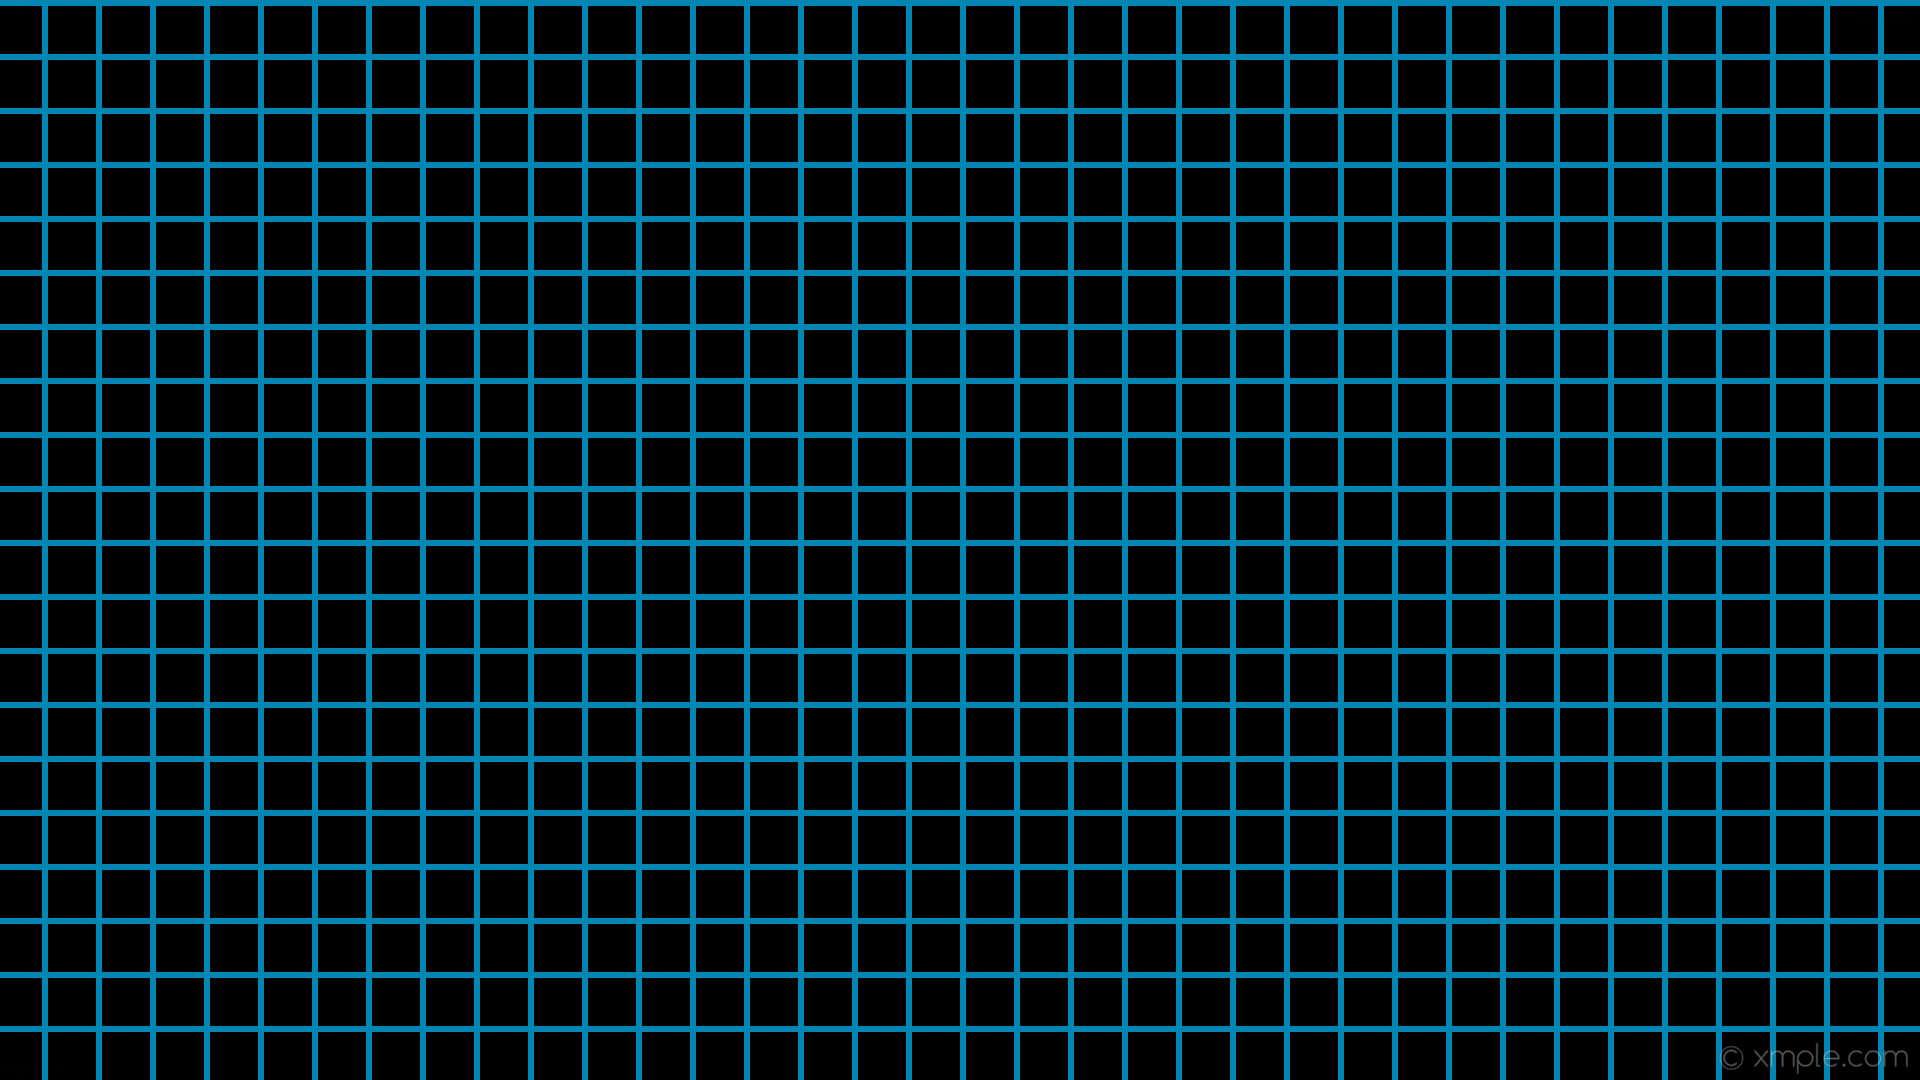 1920x1080 wallpaper graph paper black blue grid deep sky blue #000000 #00bfff 0Â° 6px